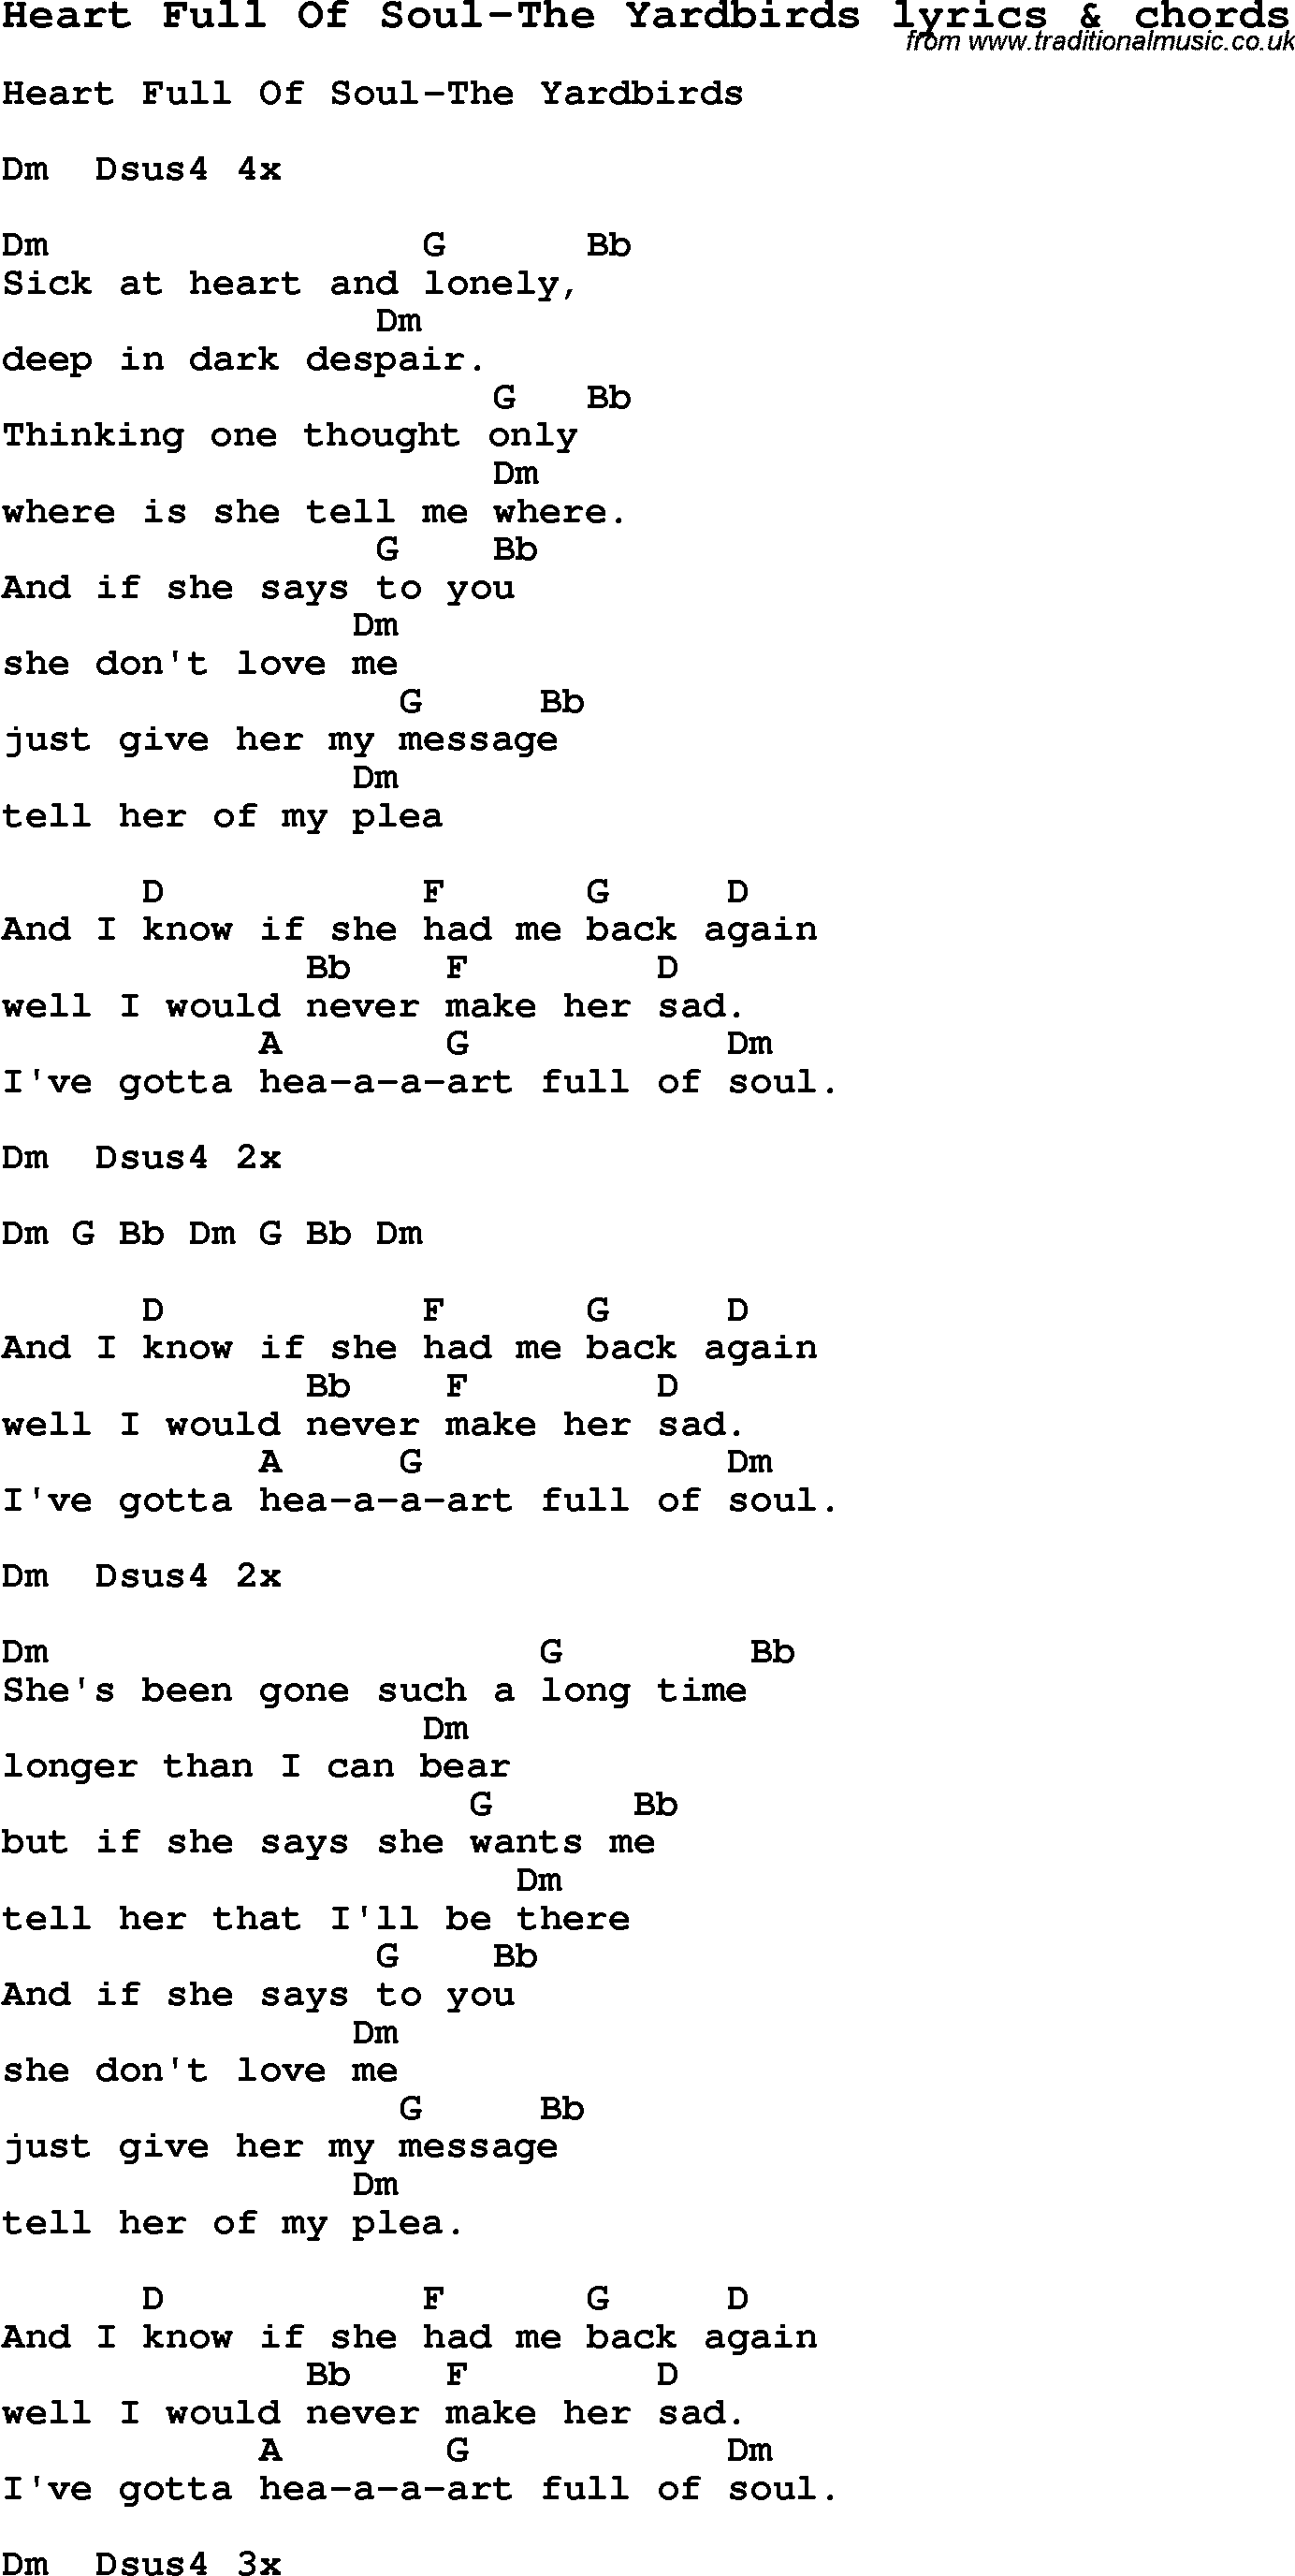 Love Song Lyrics for: Heart Full Of Soul-The Yardbirds with chords for Ukulele, Guitar Banjo etc.